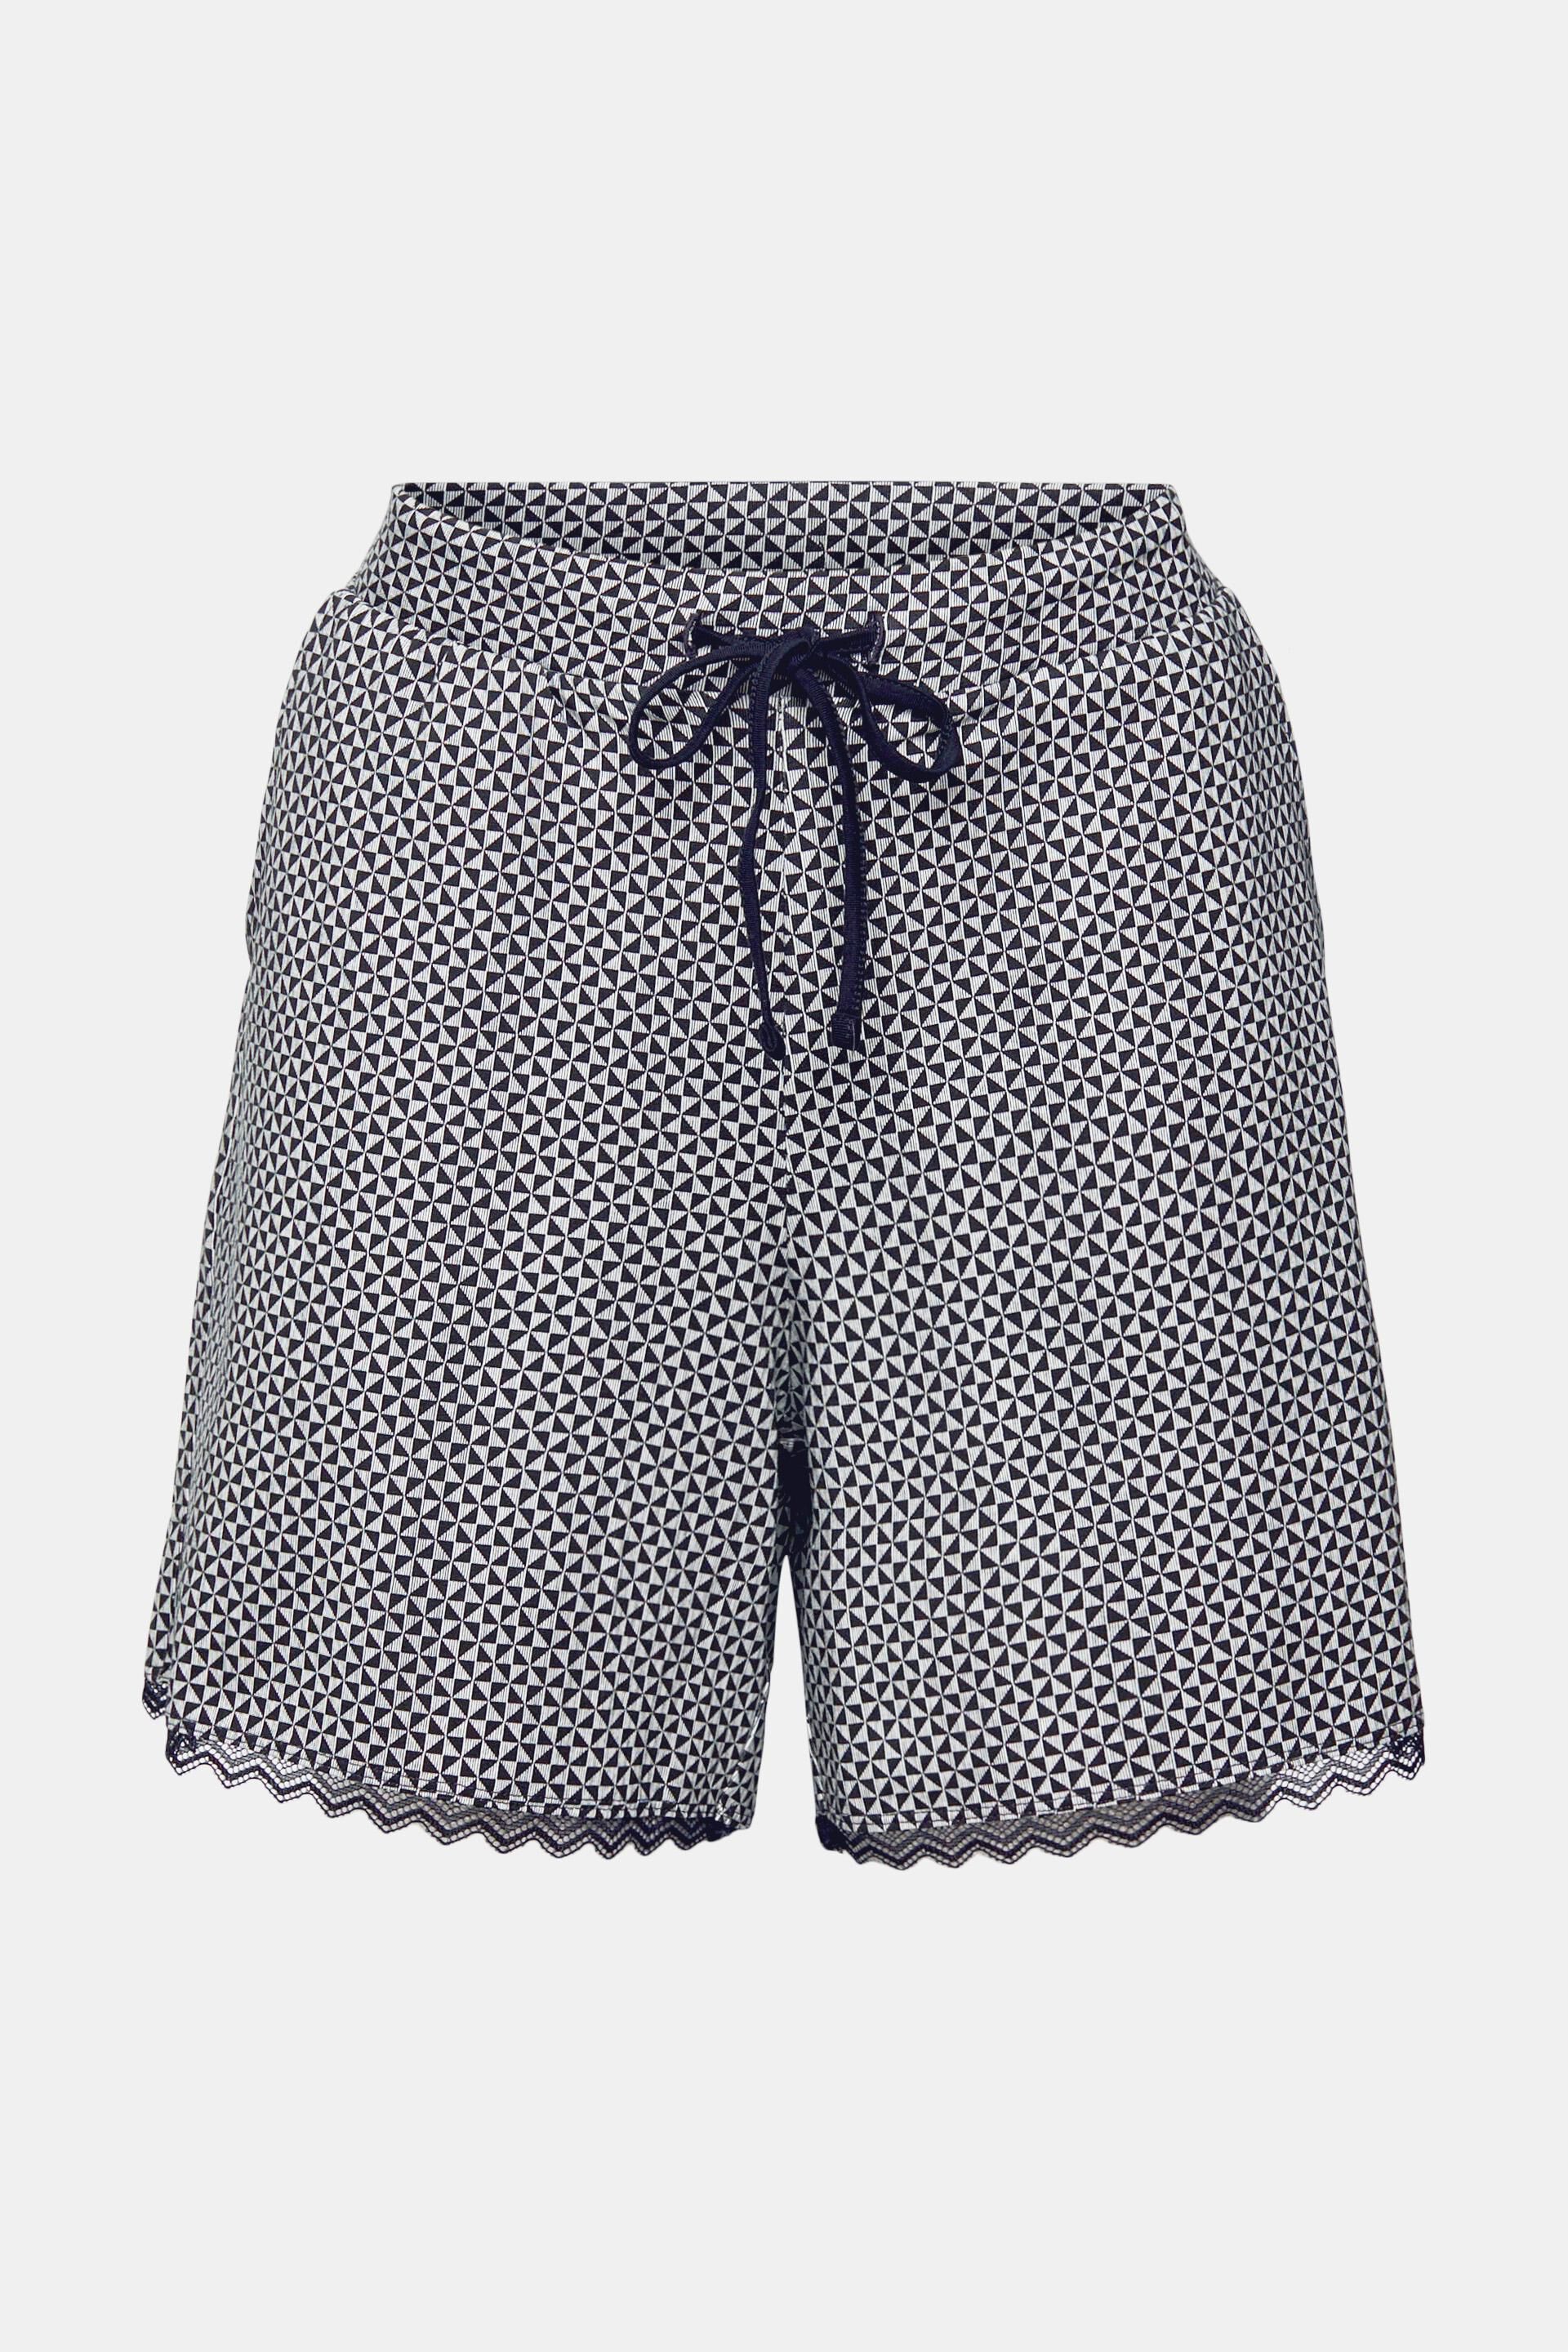 Esprit Bedruckte Jersey-Shorts